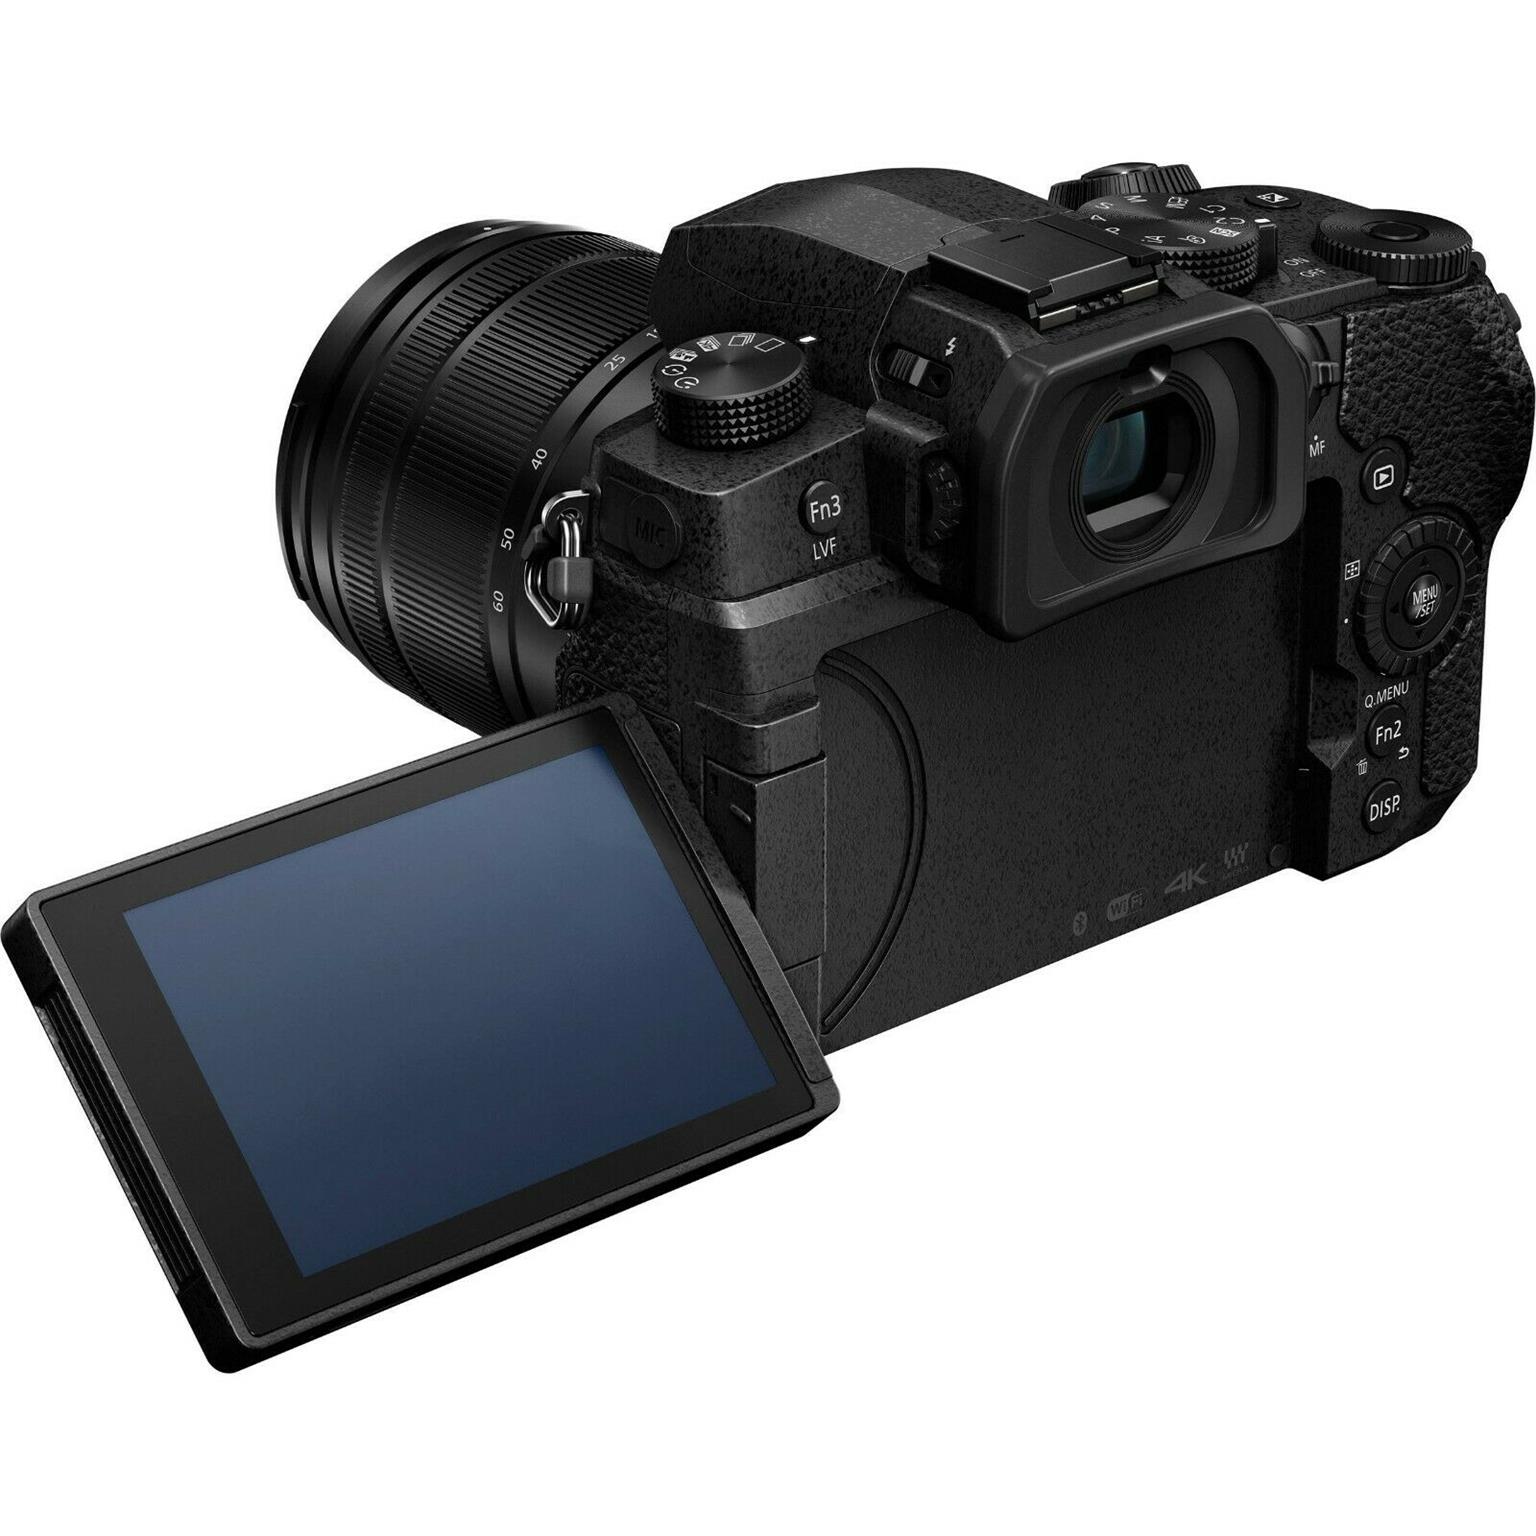 Panasonic G95 with lens